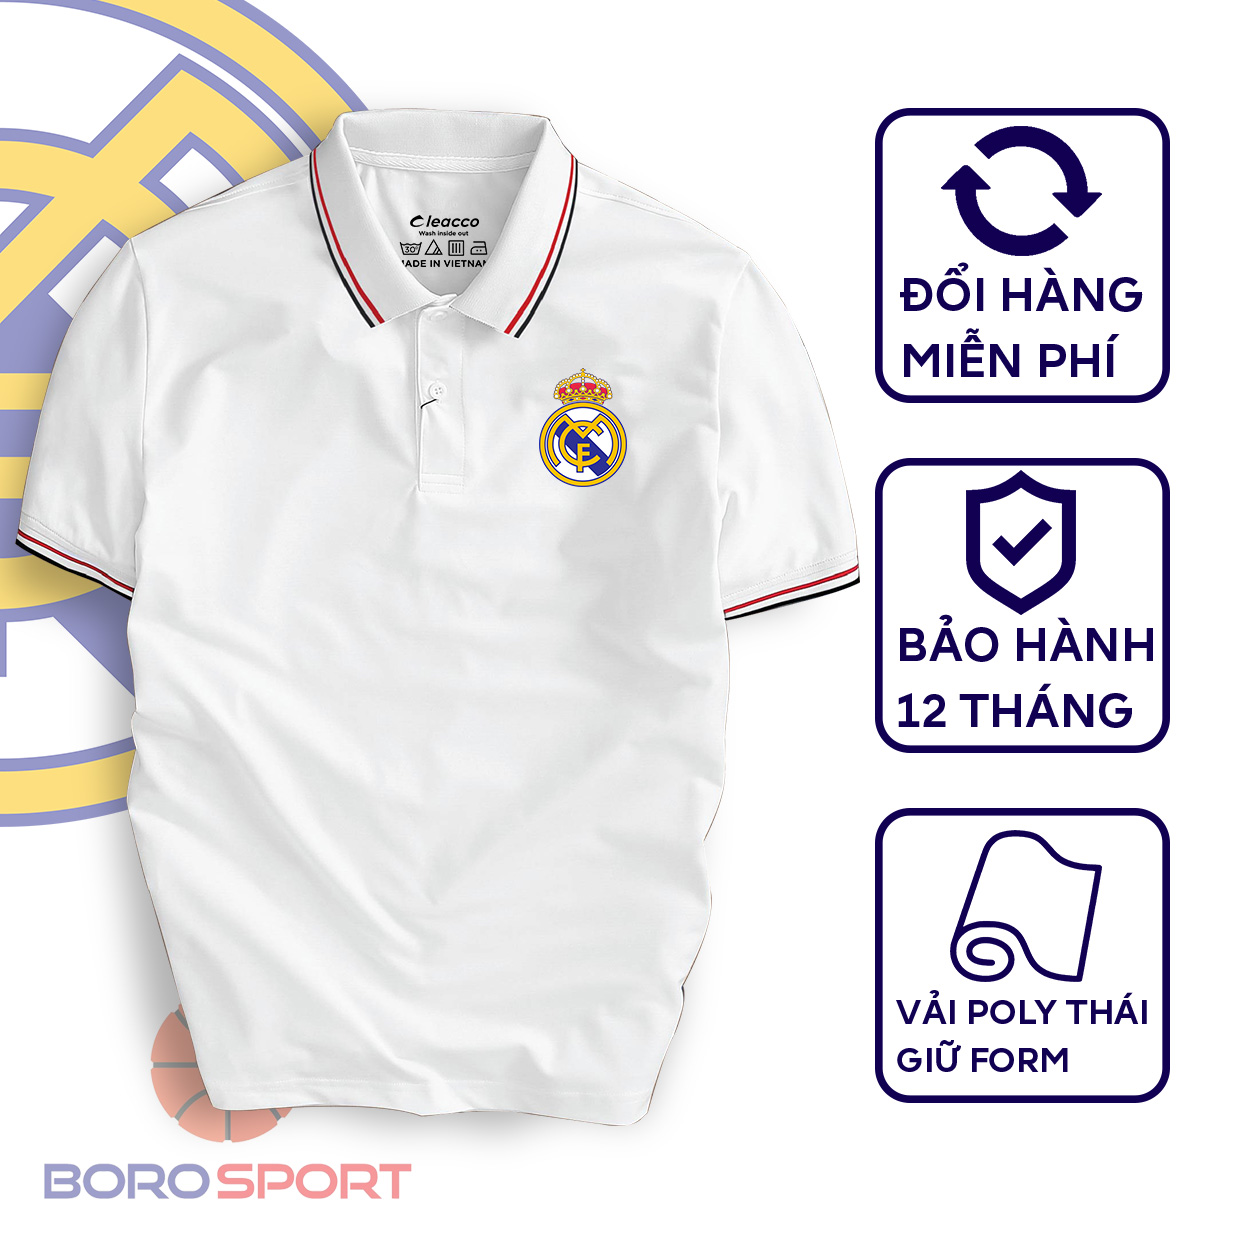 Áo Polo Nam Siêu Ưu Đãi Áo Thun Polo Cổ Bẻ Chất Liệu Vải Poly Thái Giữ Form Dáng Cleacco Real Madrid Boro Sport